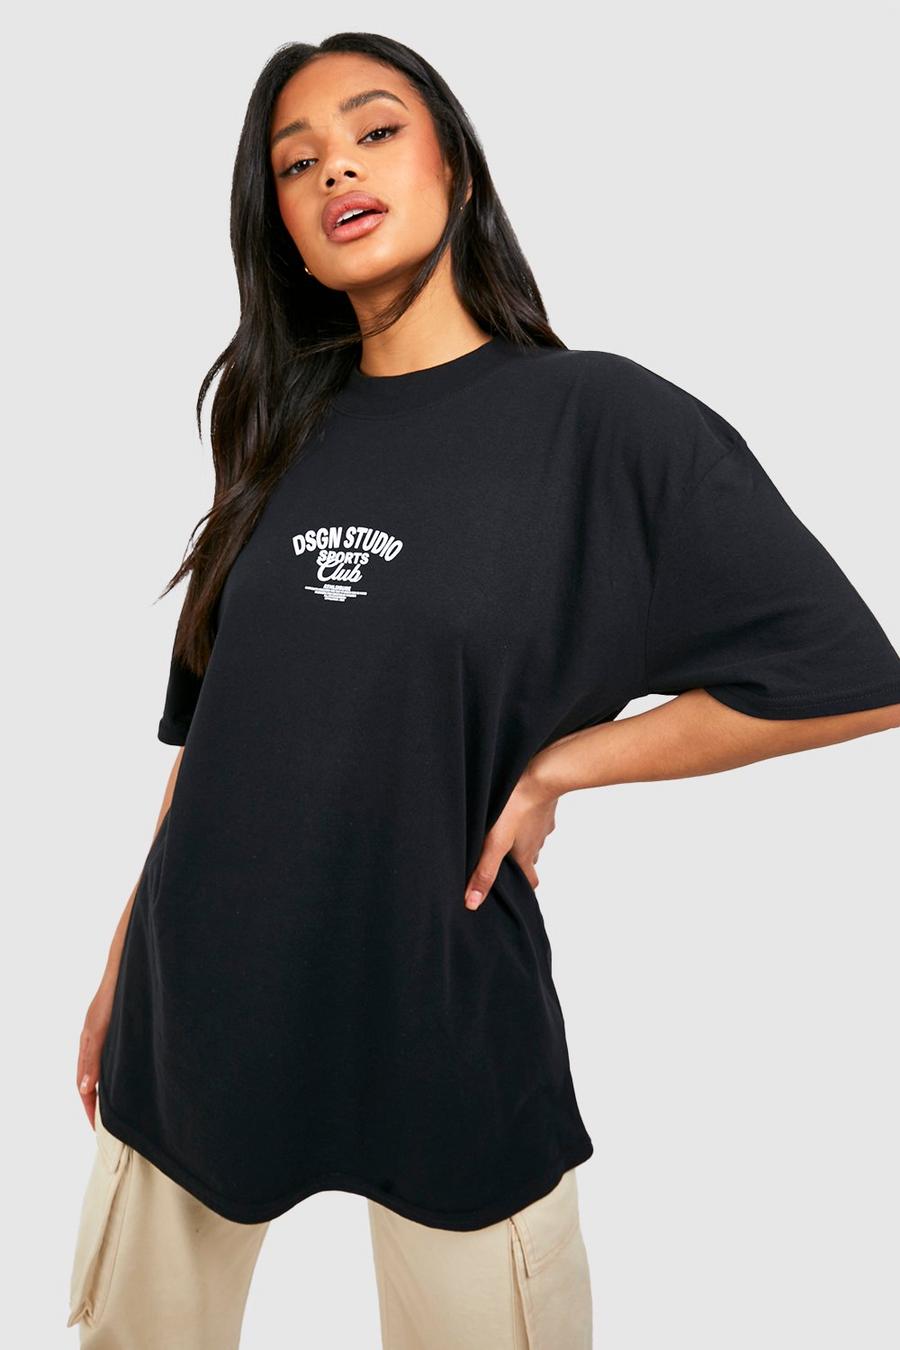 Camiseta oversize con eslogan Dsgn Studio Sports Club, Black